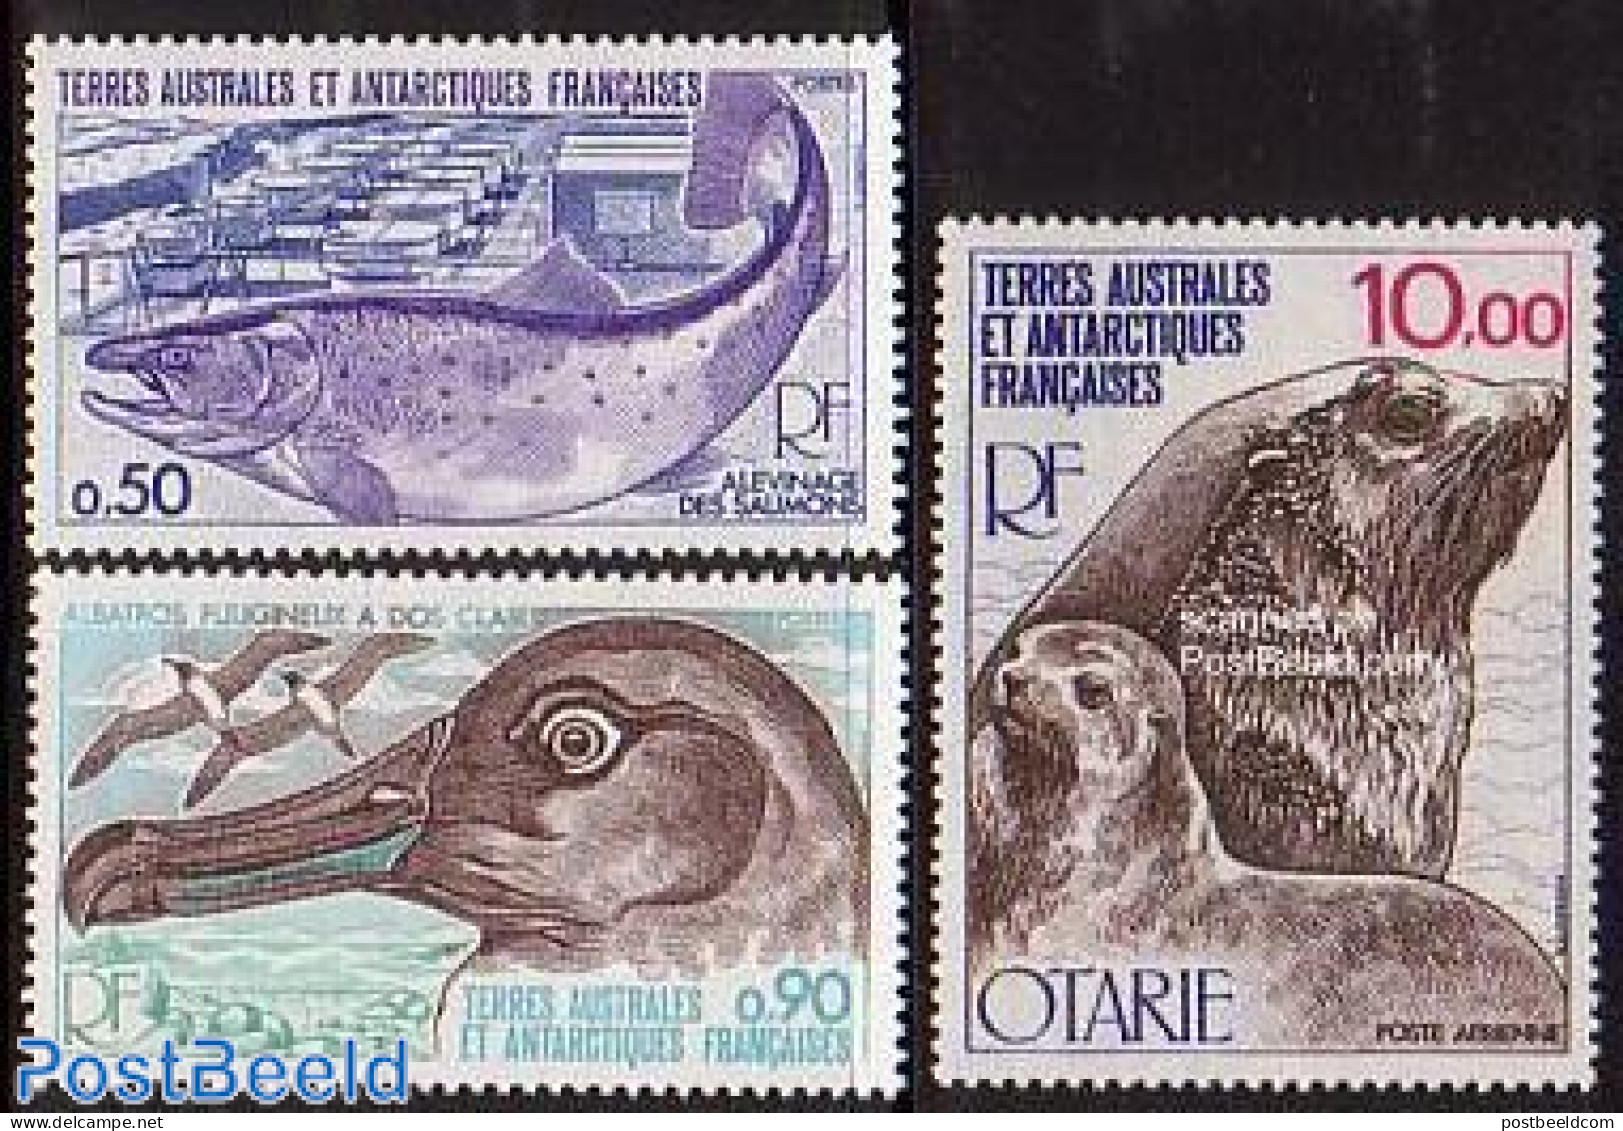 French Antarctic Territory 1977 Animals 3v, Mint NH, Nature - Birds - Fish - Sea Mammals - Ungebraucht